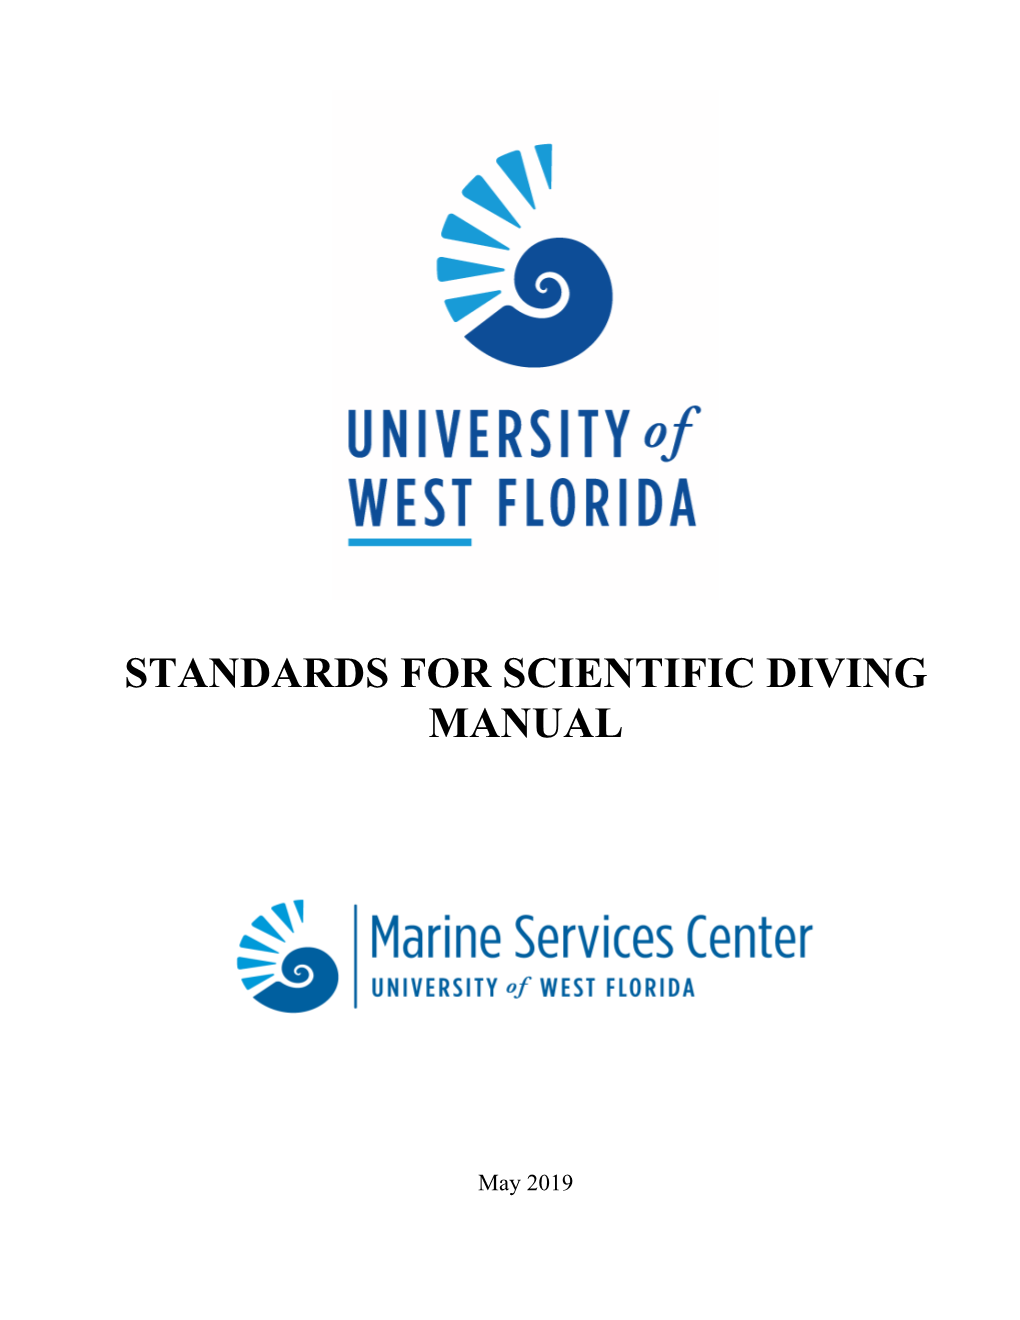 Standards for Scientific Diving Manual